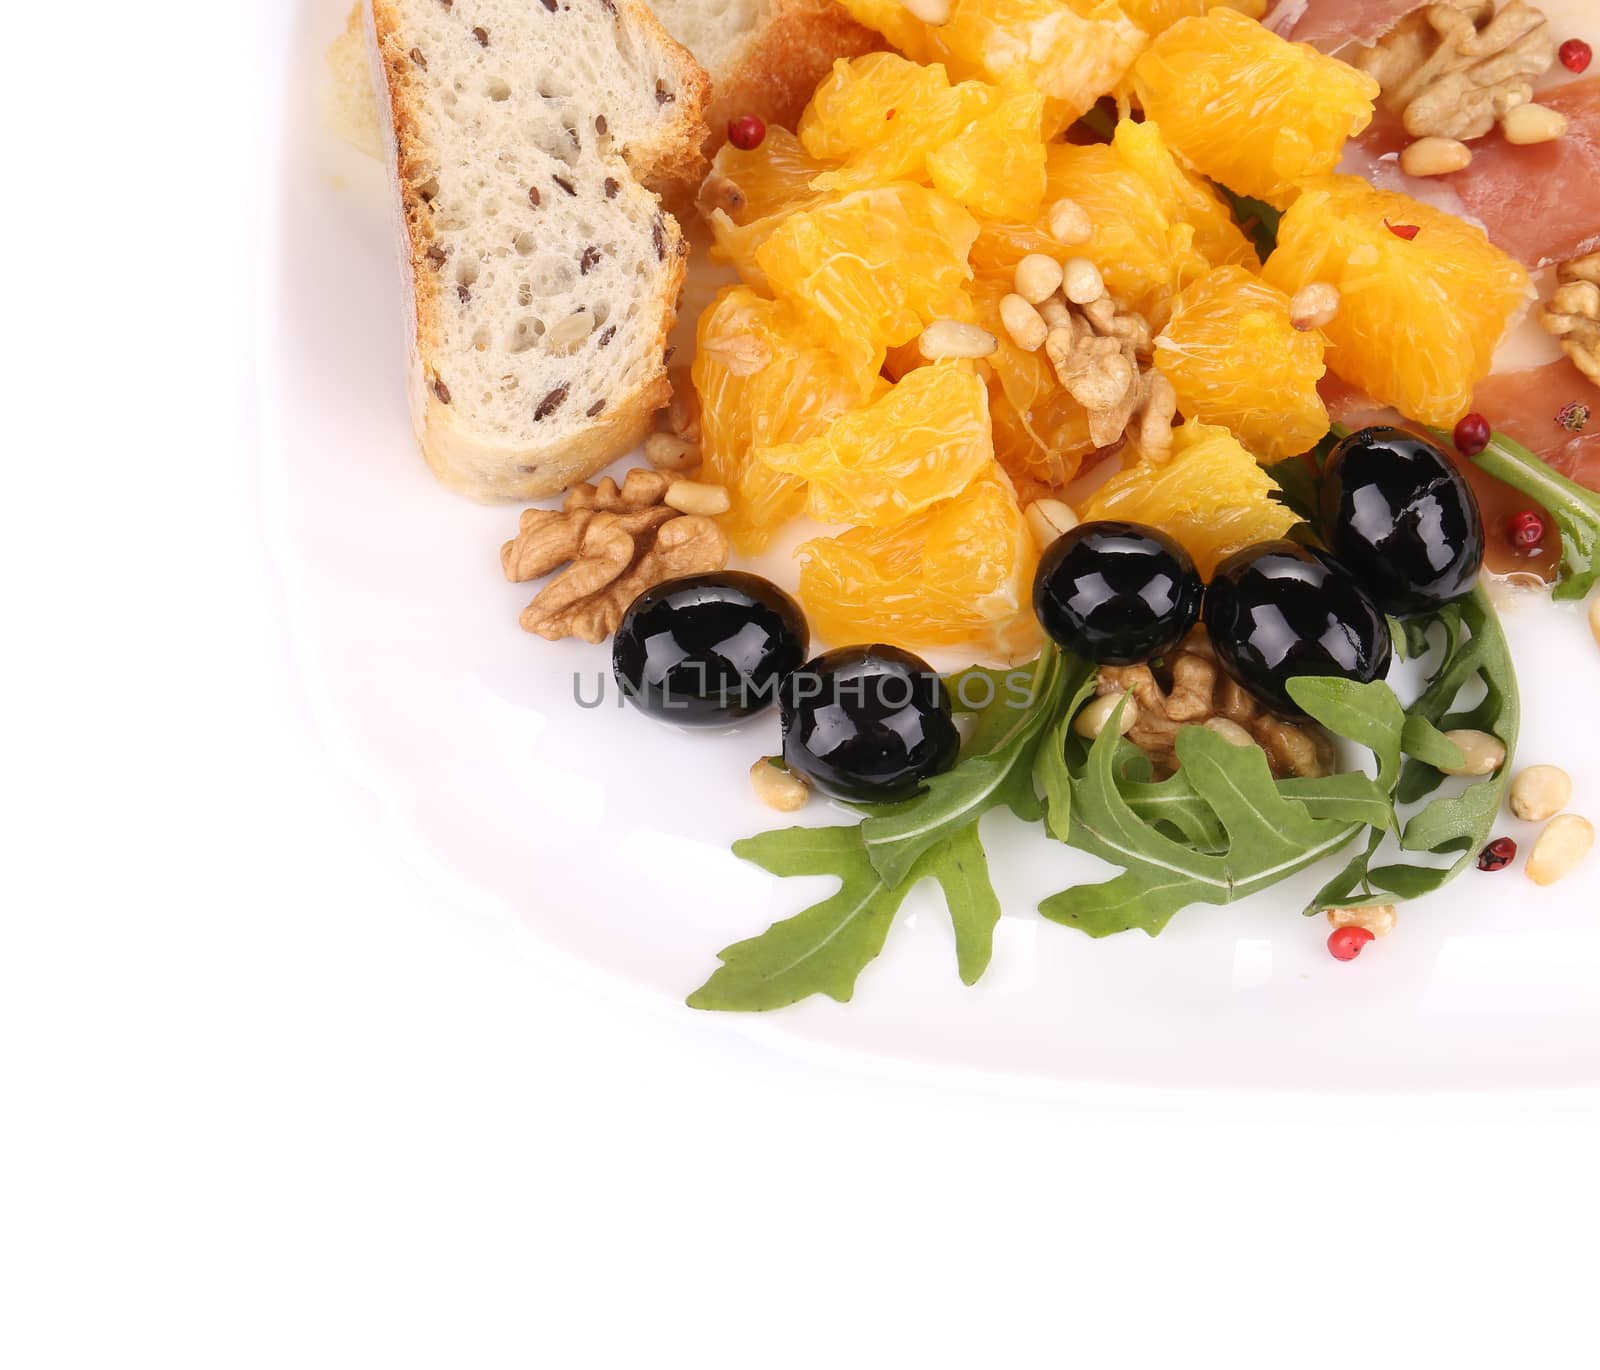 Salad with arugula and prosciutto. by indigolotos